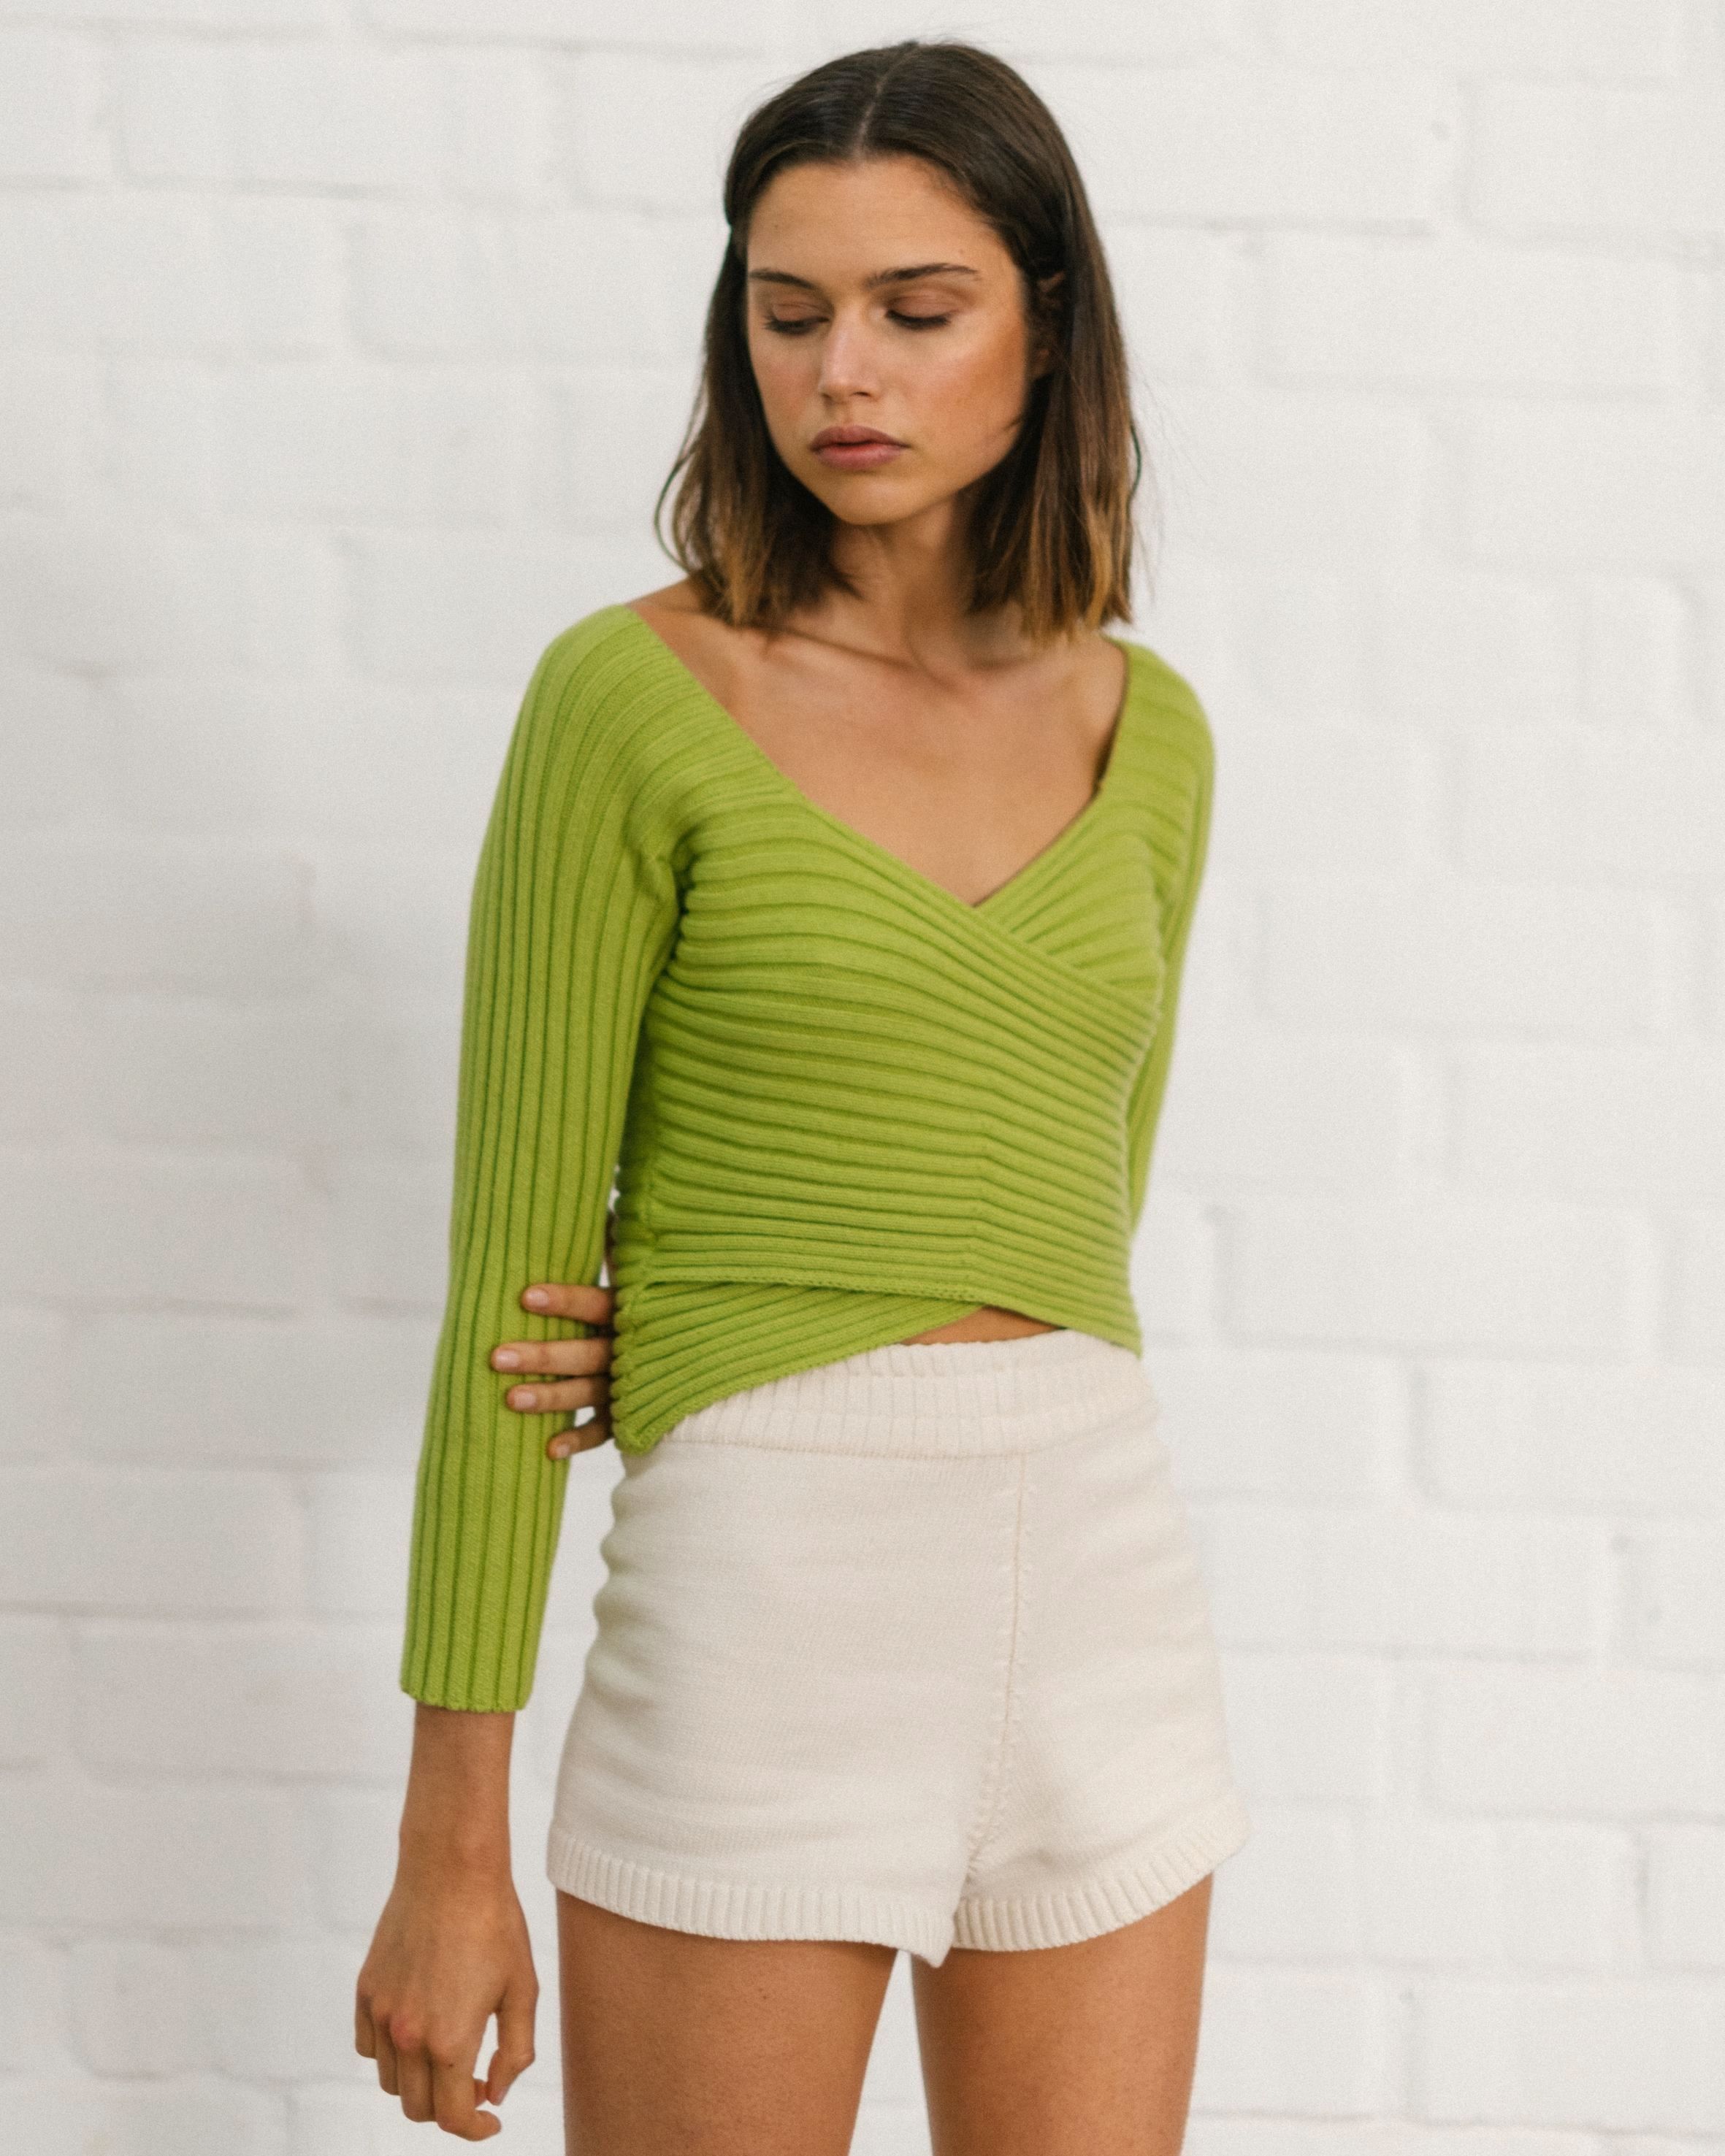 smart-green-crossed-knit-top-cotton-tops-alohas-838741.jpg